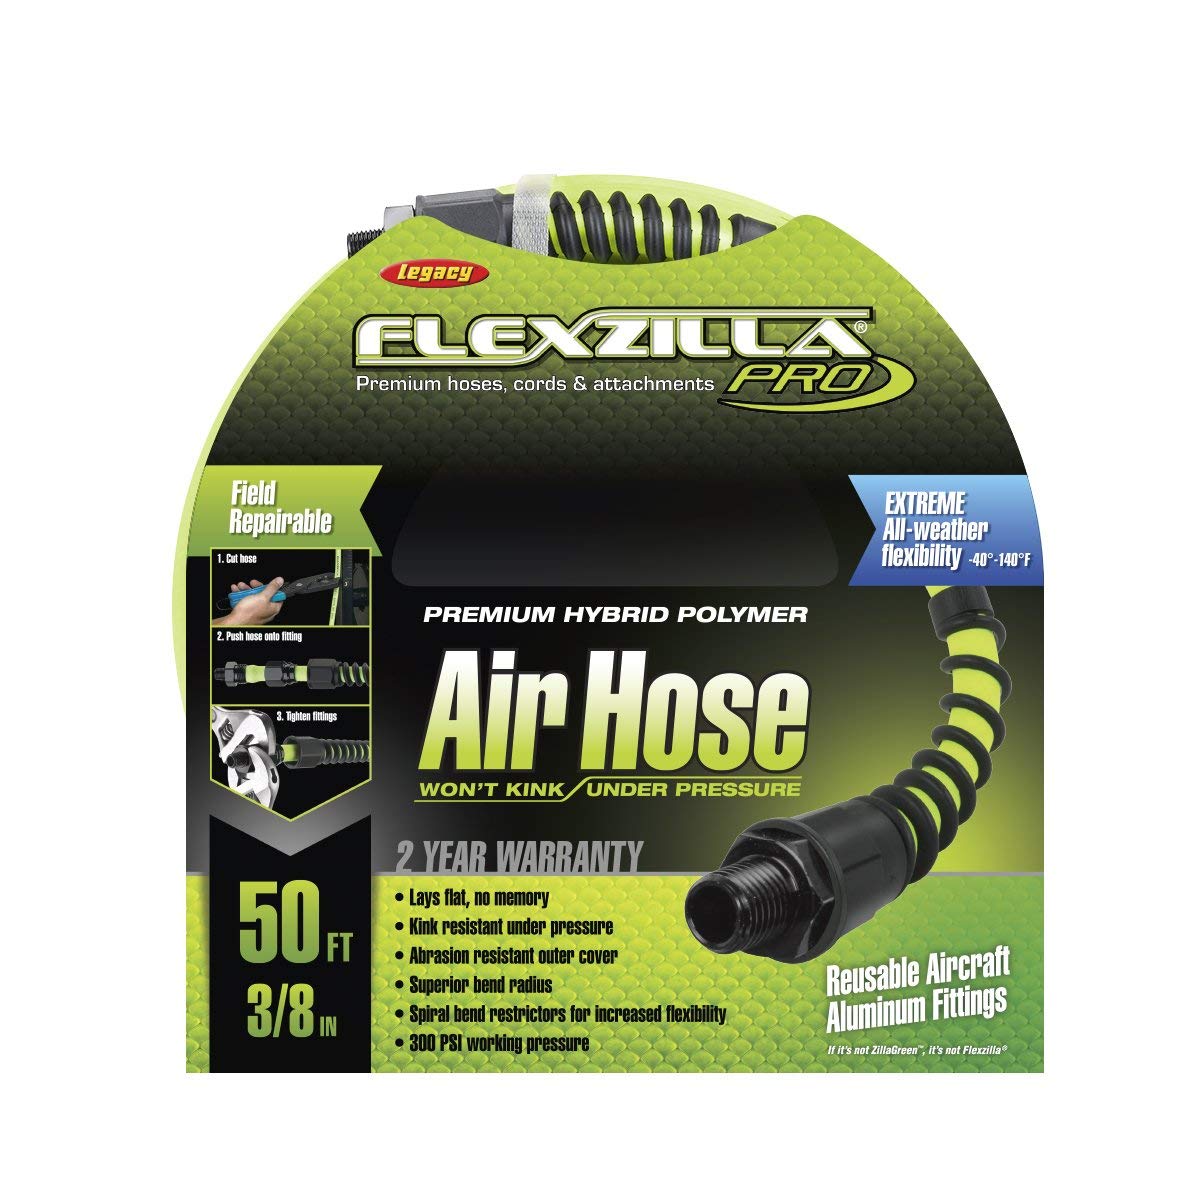 Flexzilla Pro Field Repairable 3/8" x 50' Air Hose